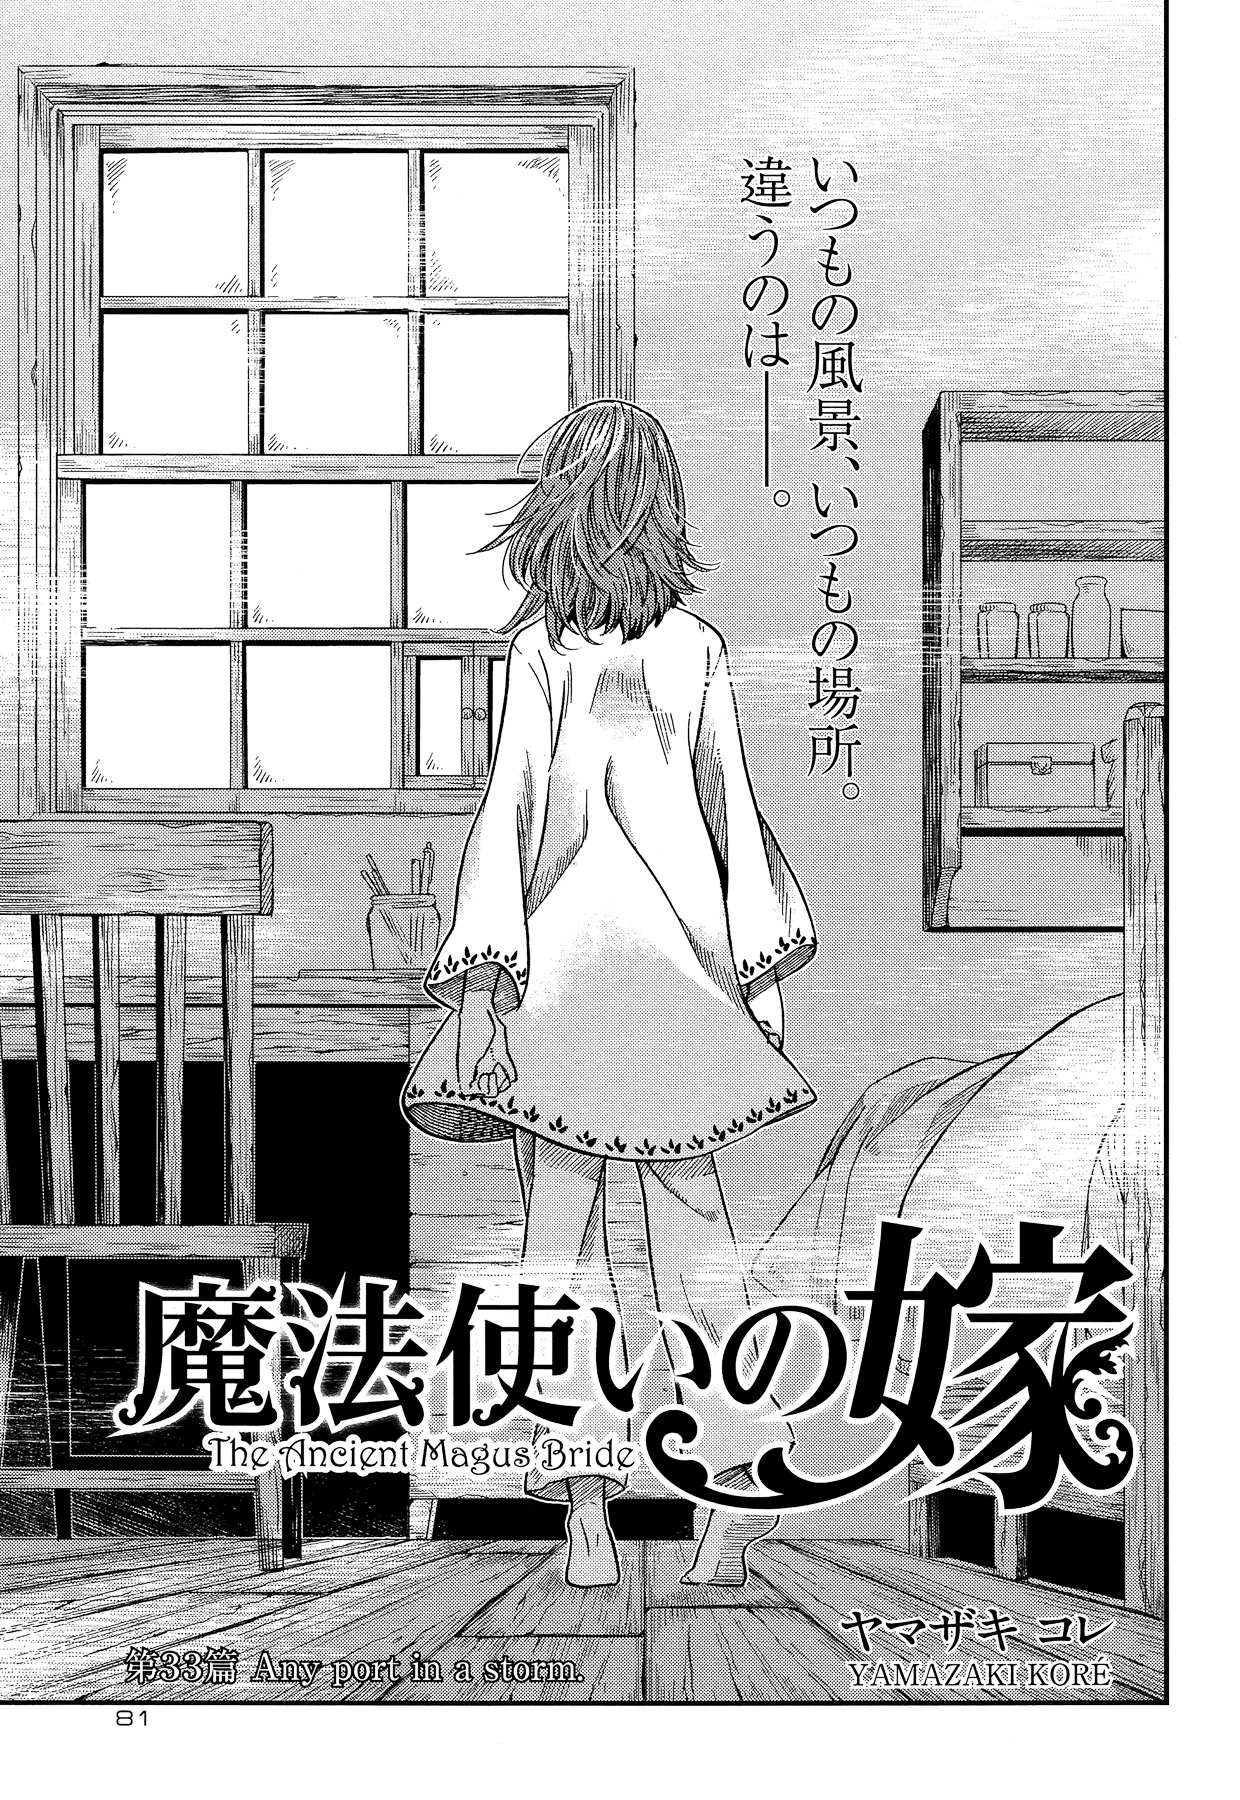 Read Mahou Tsukai No Yome Manga on Mangakakalot